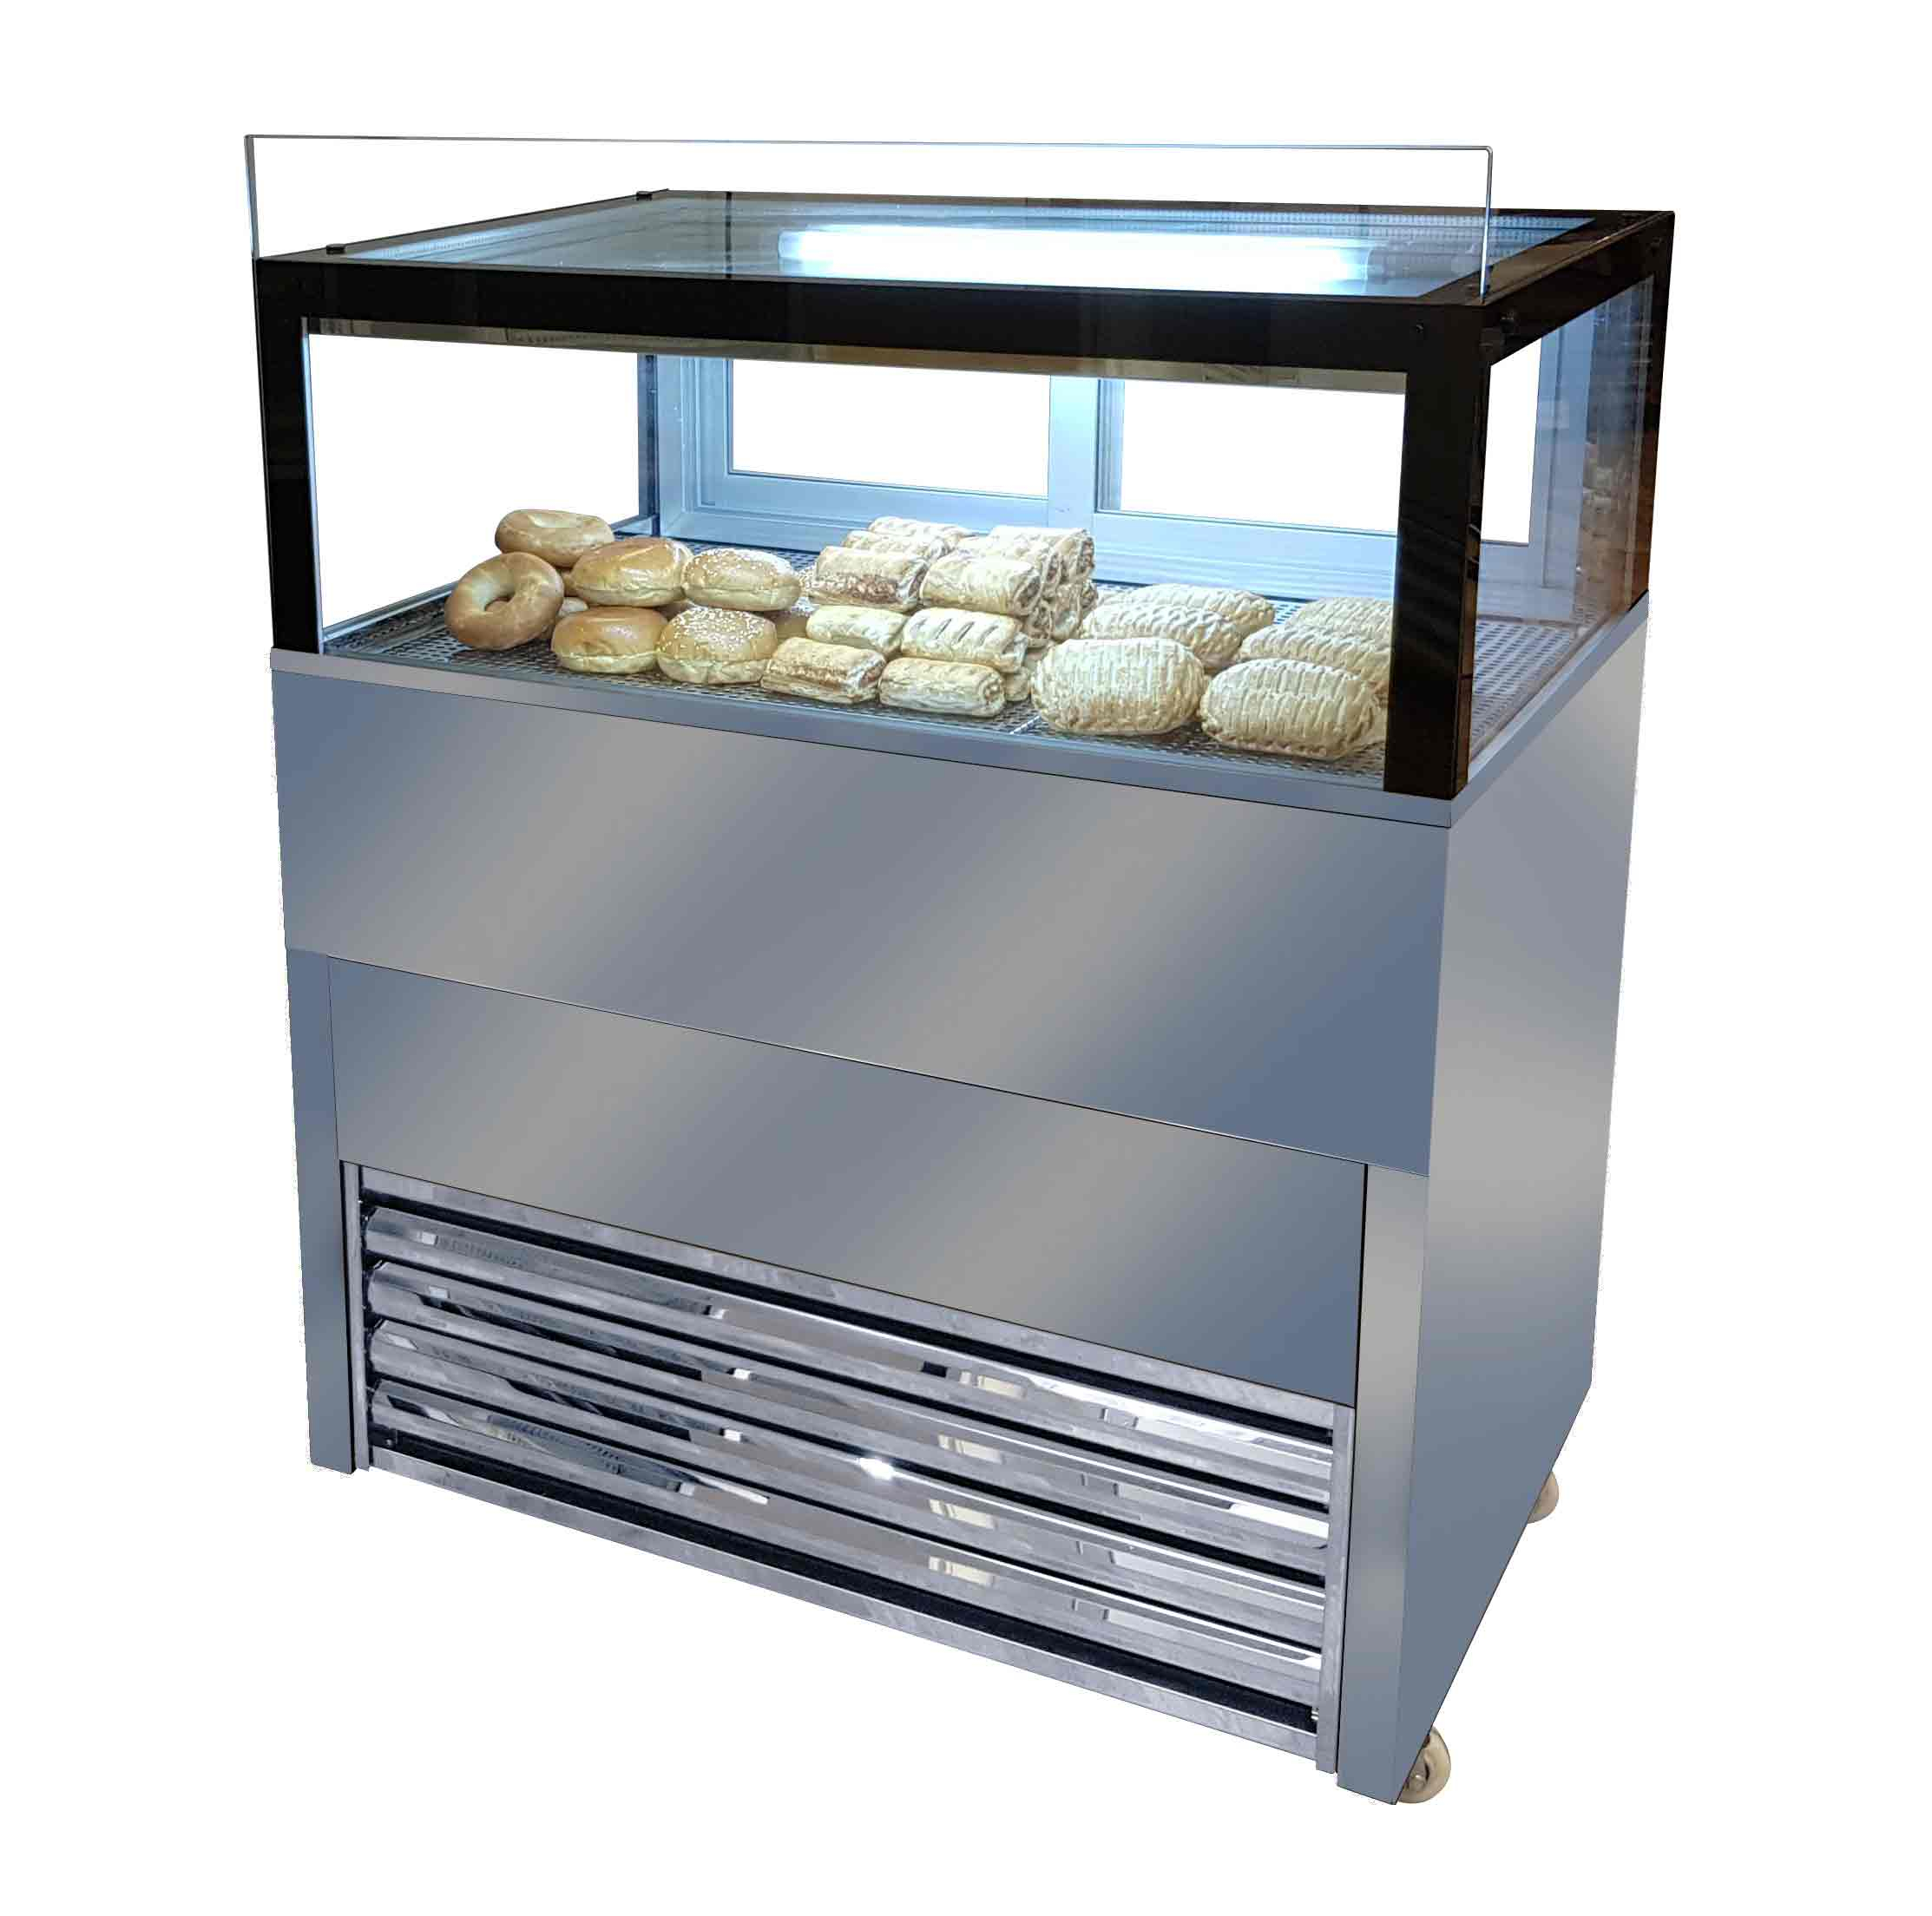 Heated Display Cabinets For Food Eco Fridge Ltd regarding measurements 2226 X 2208